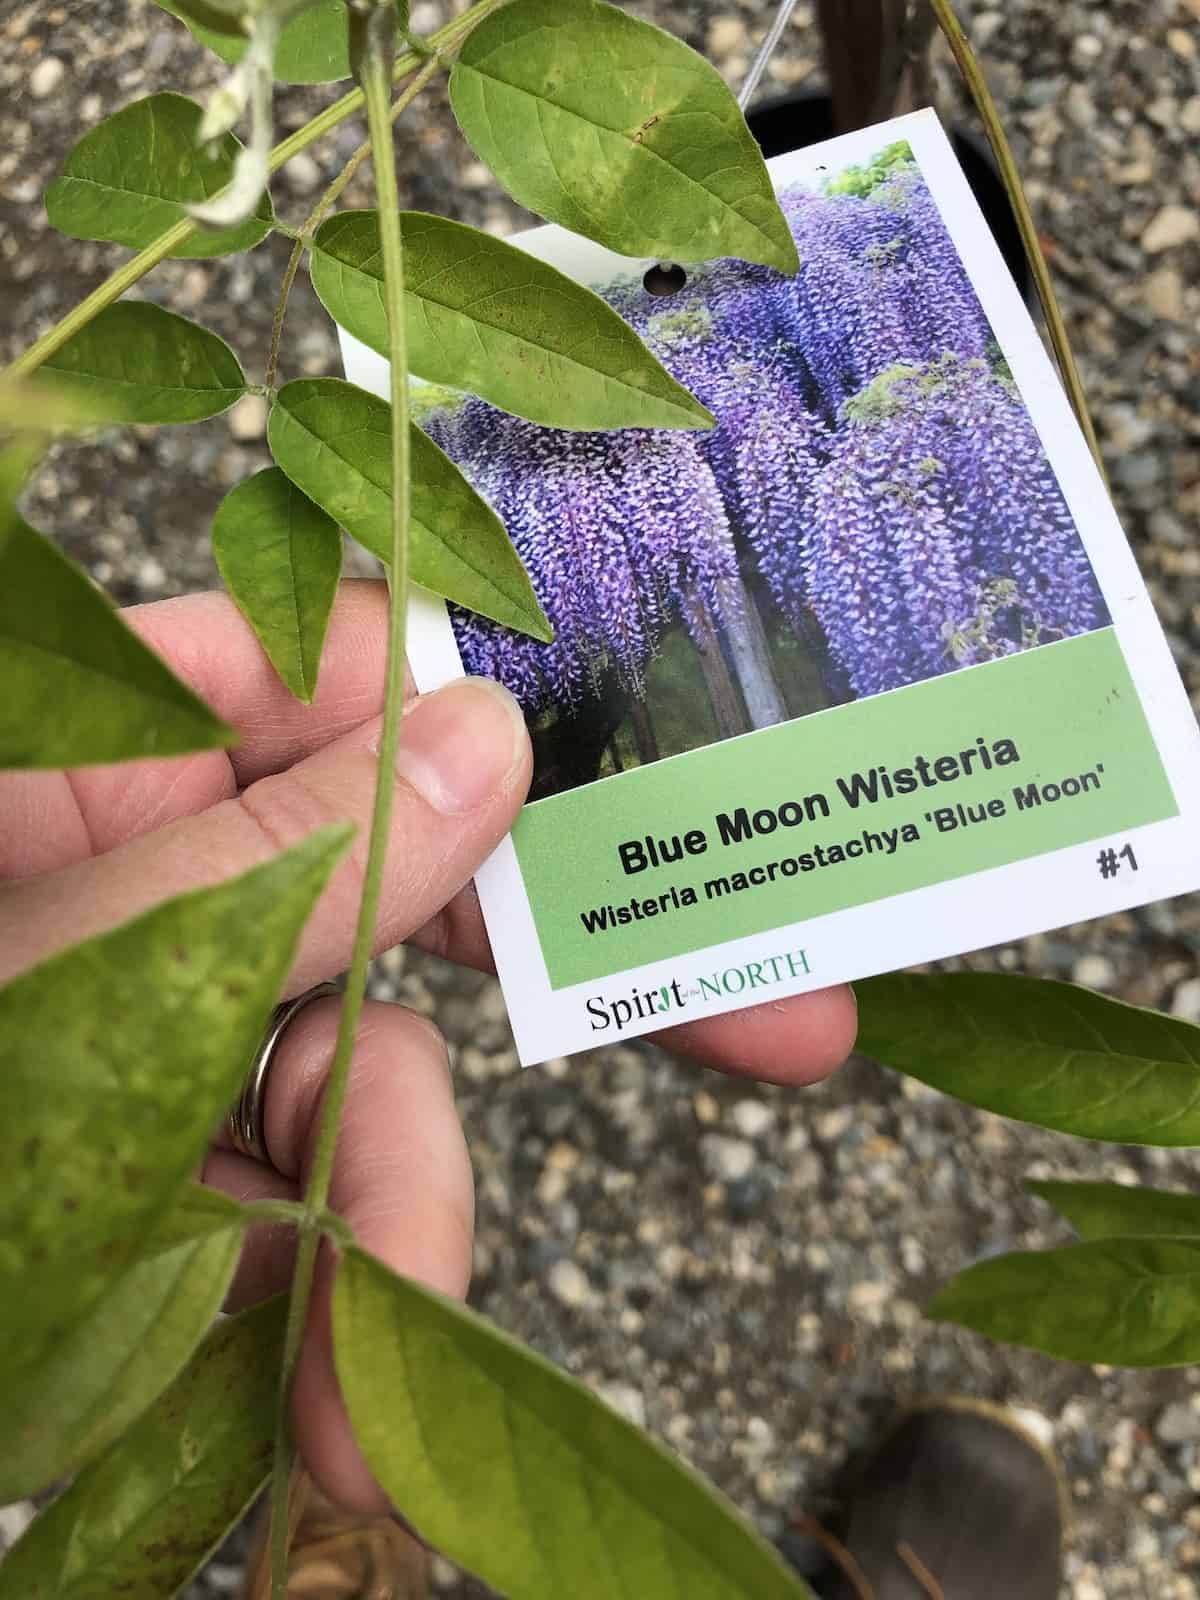 Tag for blue moon wisteria - kentucky wisteria macrostachya